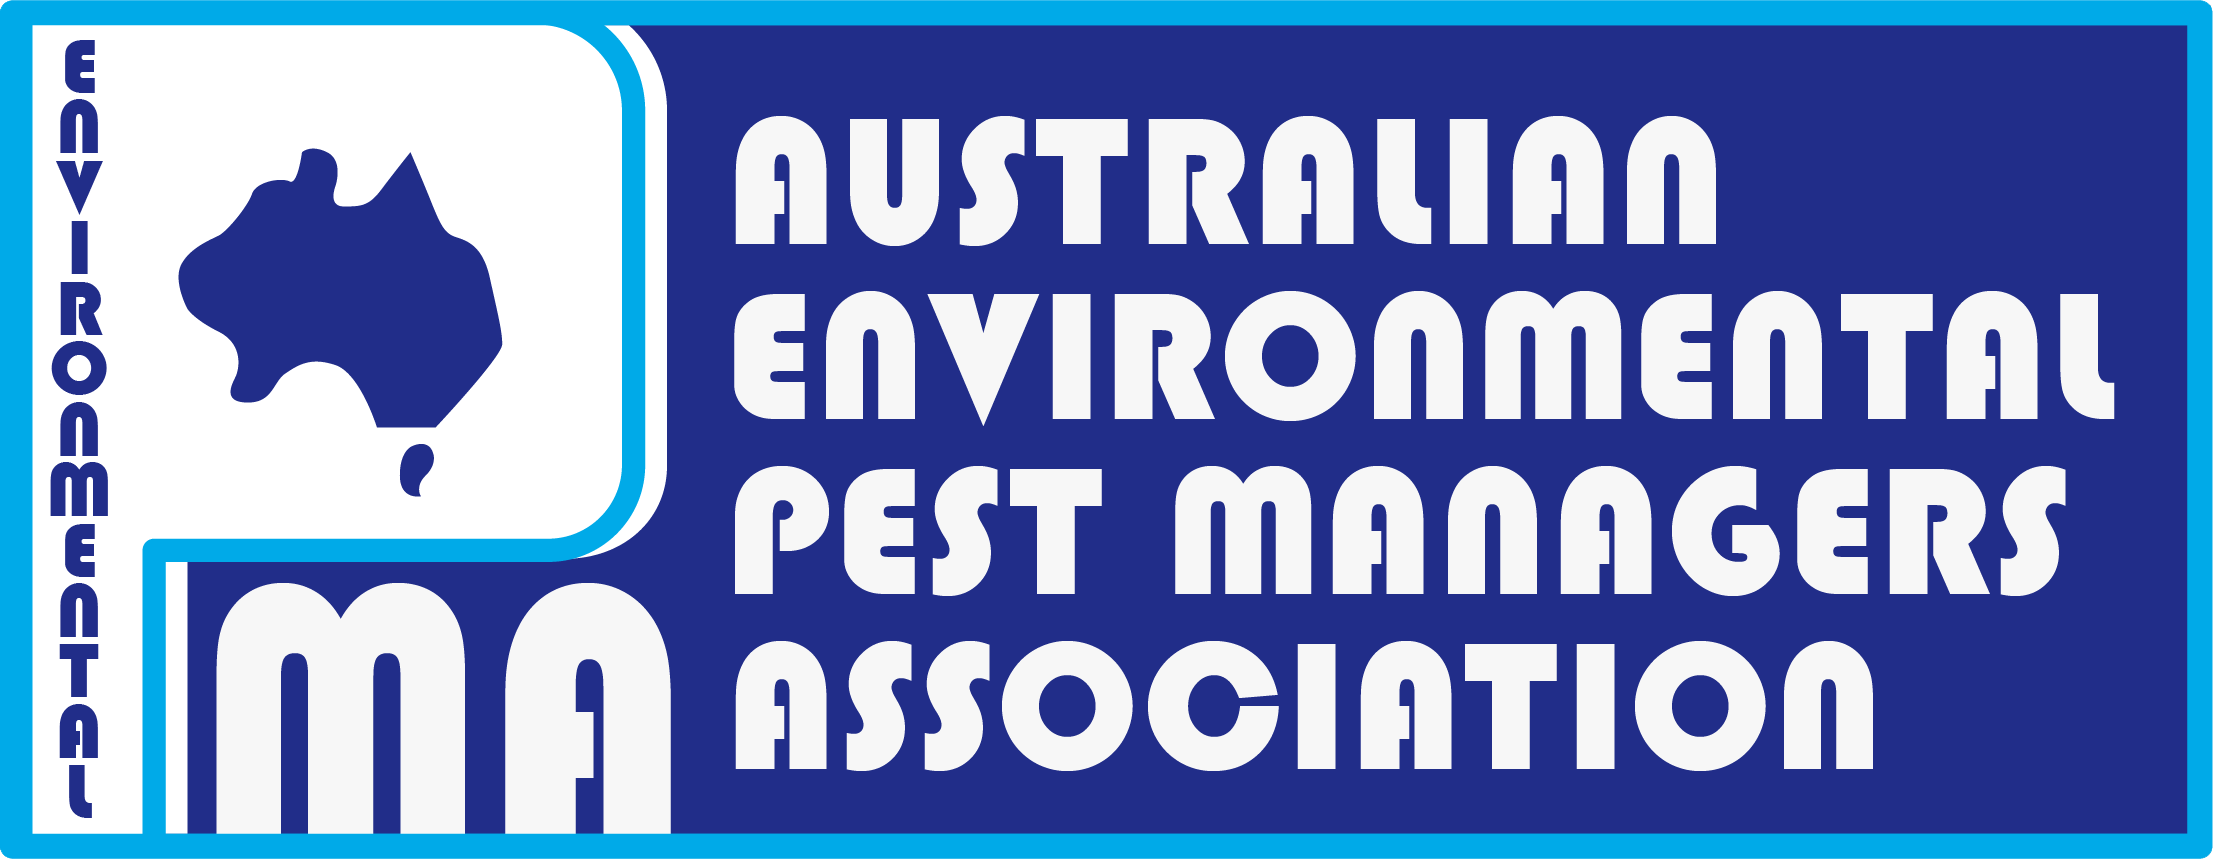 Australian Environmental Pest Managers Assocication